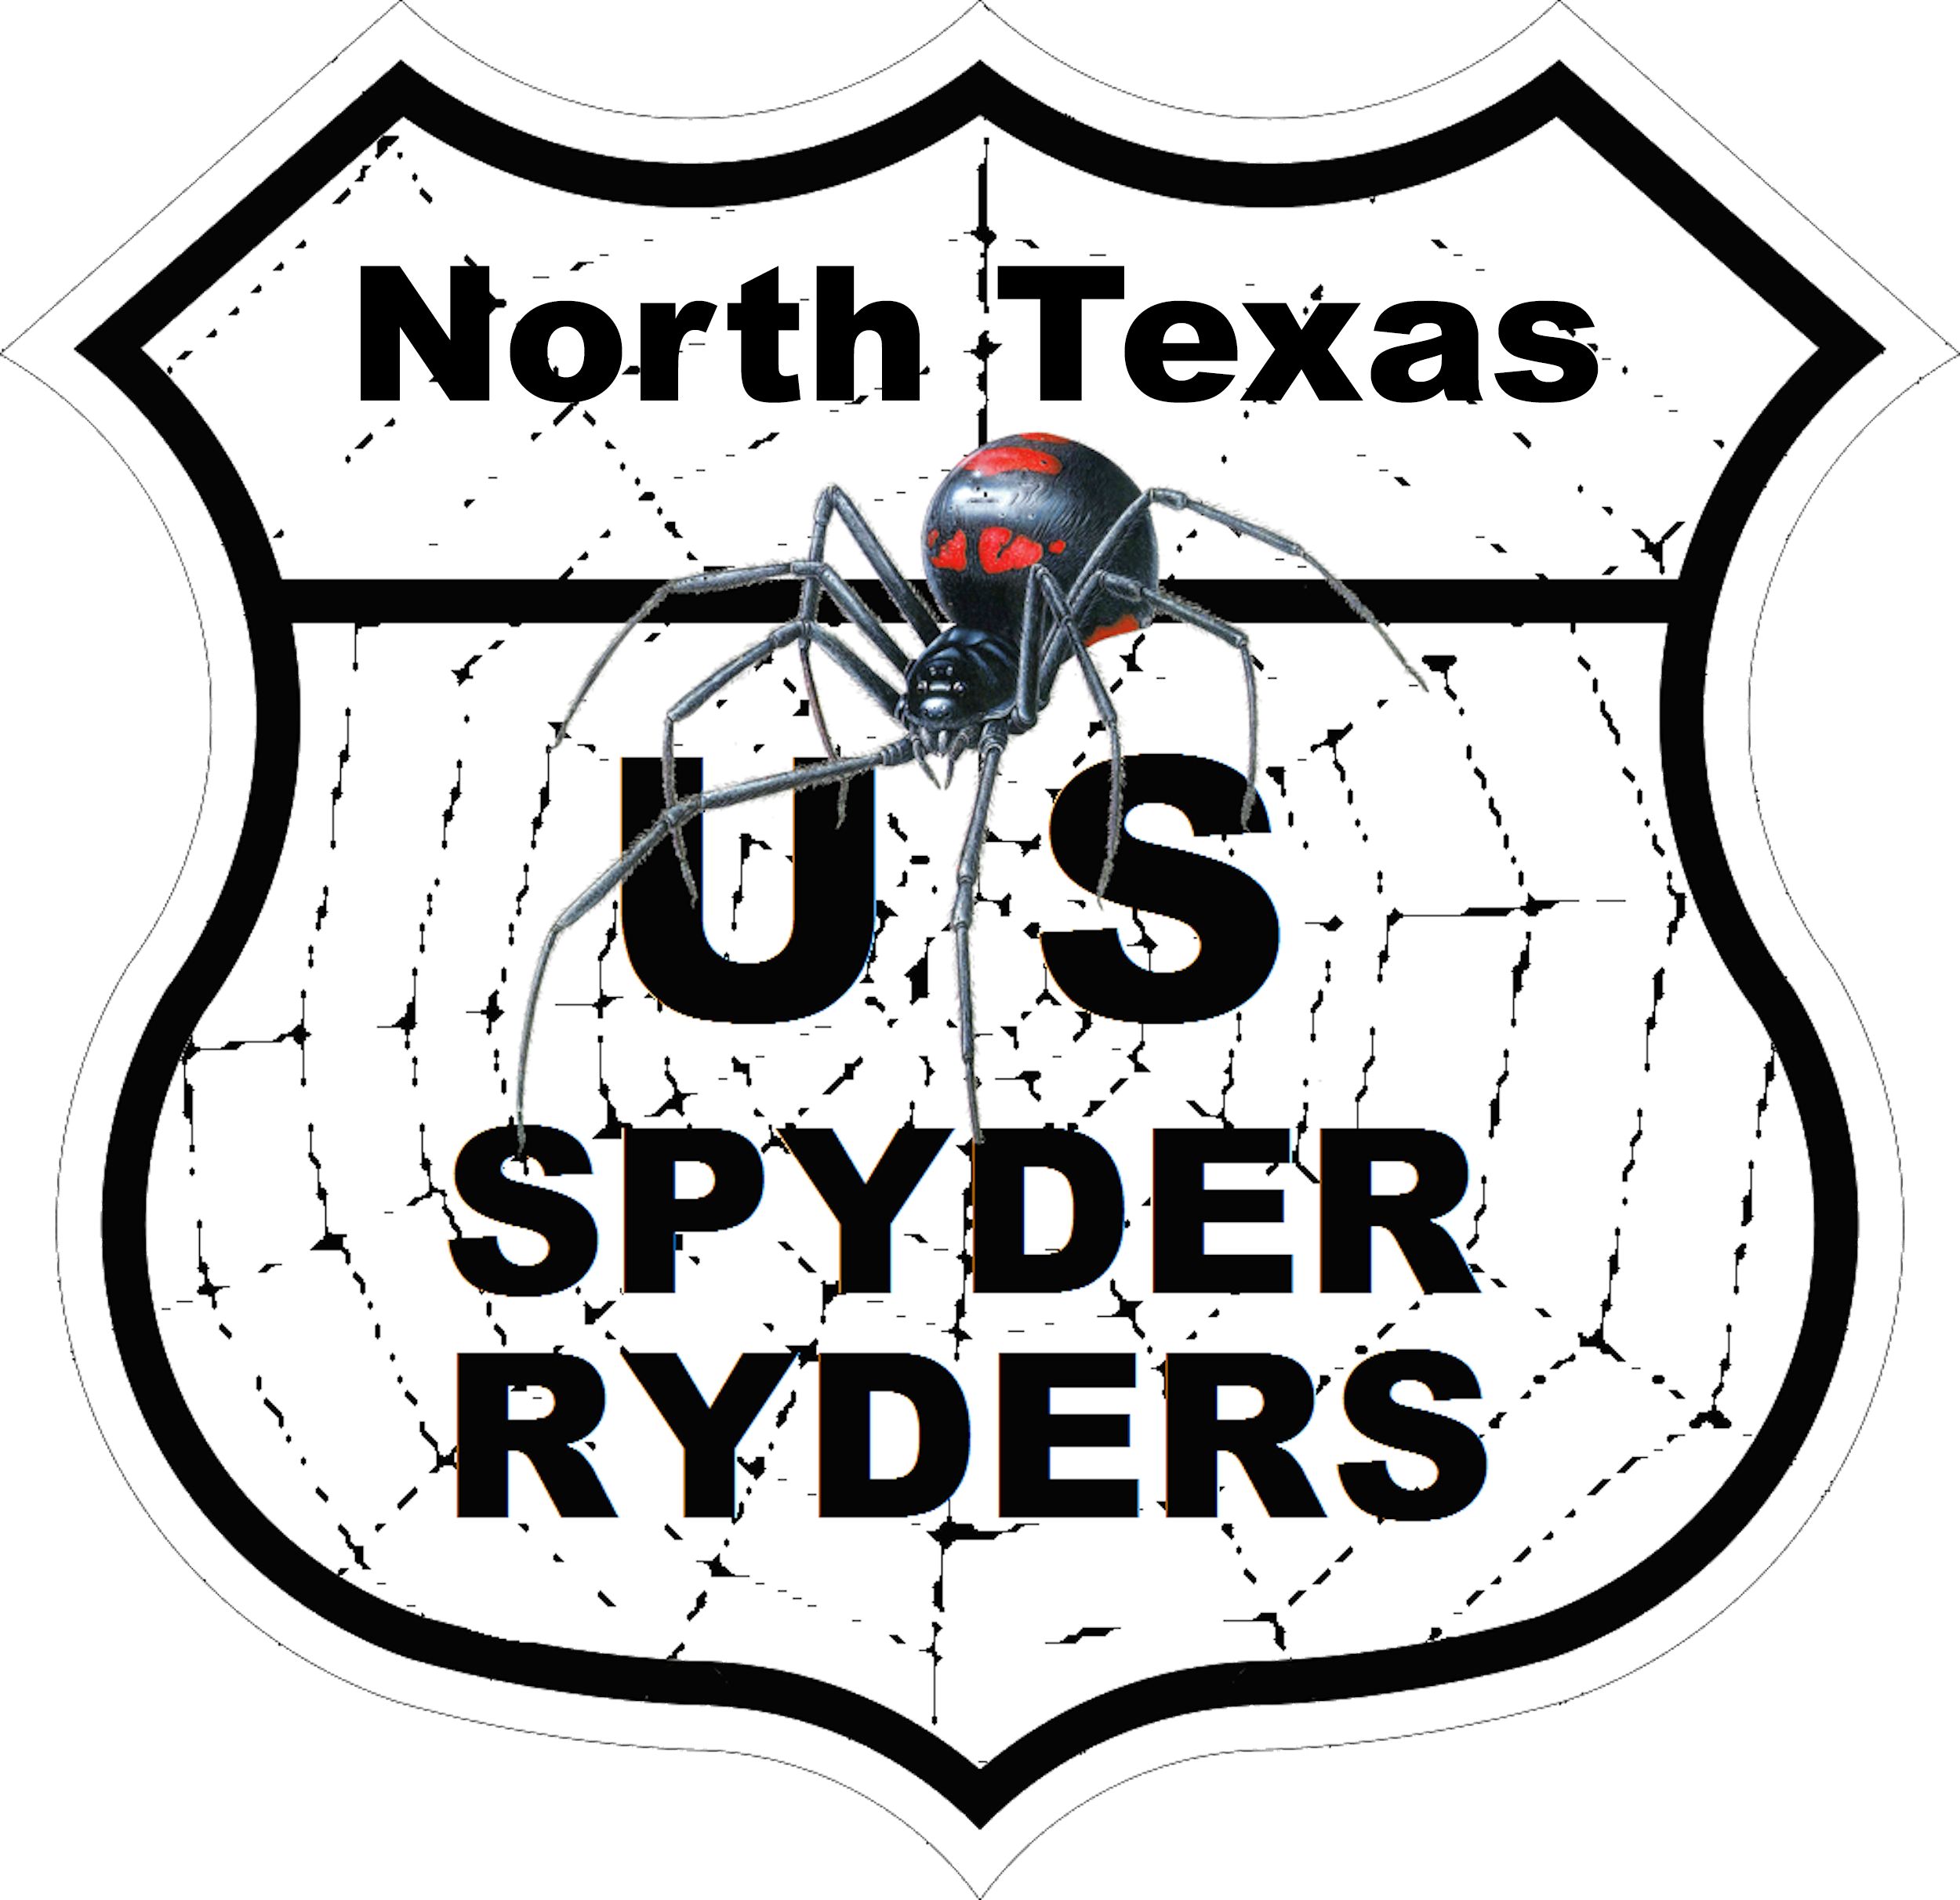 US_Spyder_Ryder_TX_North Texas.png